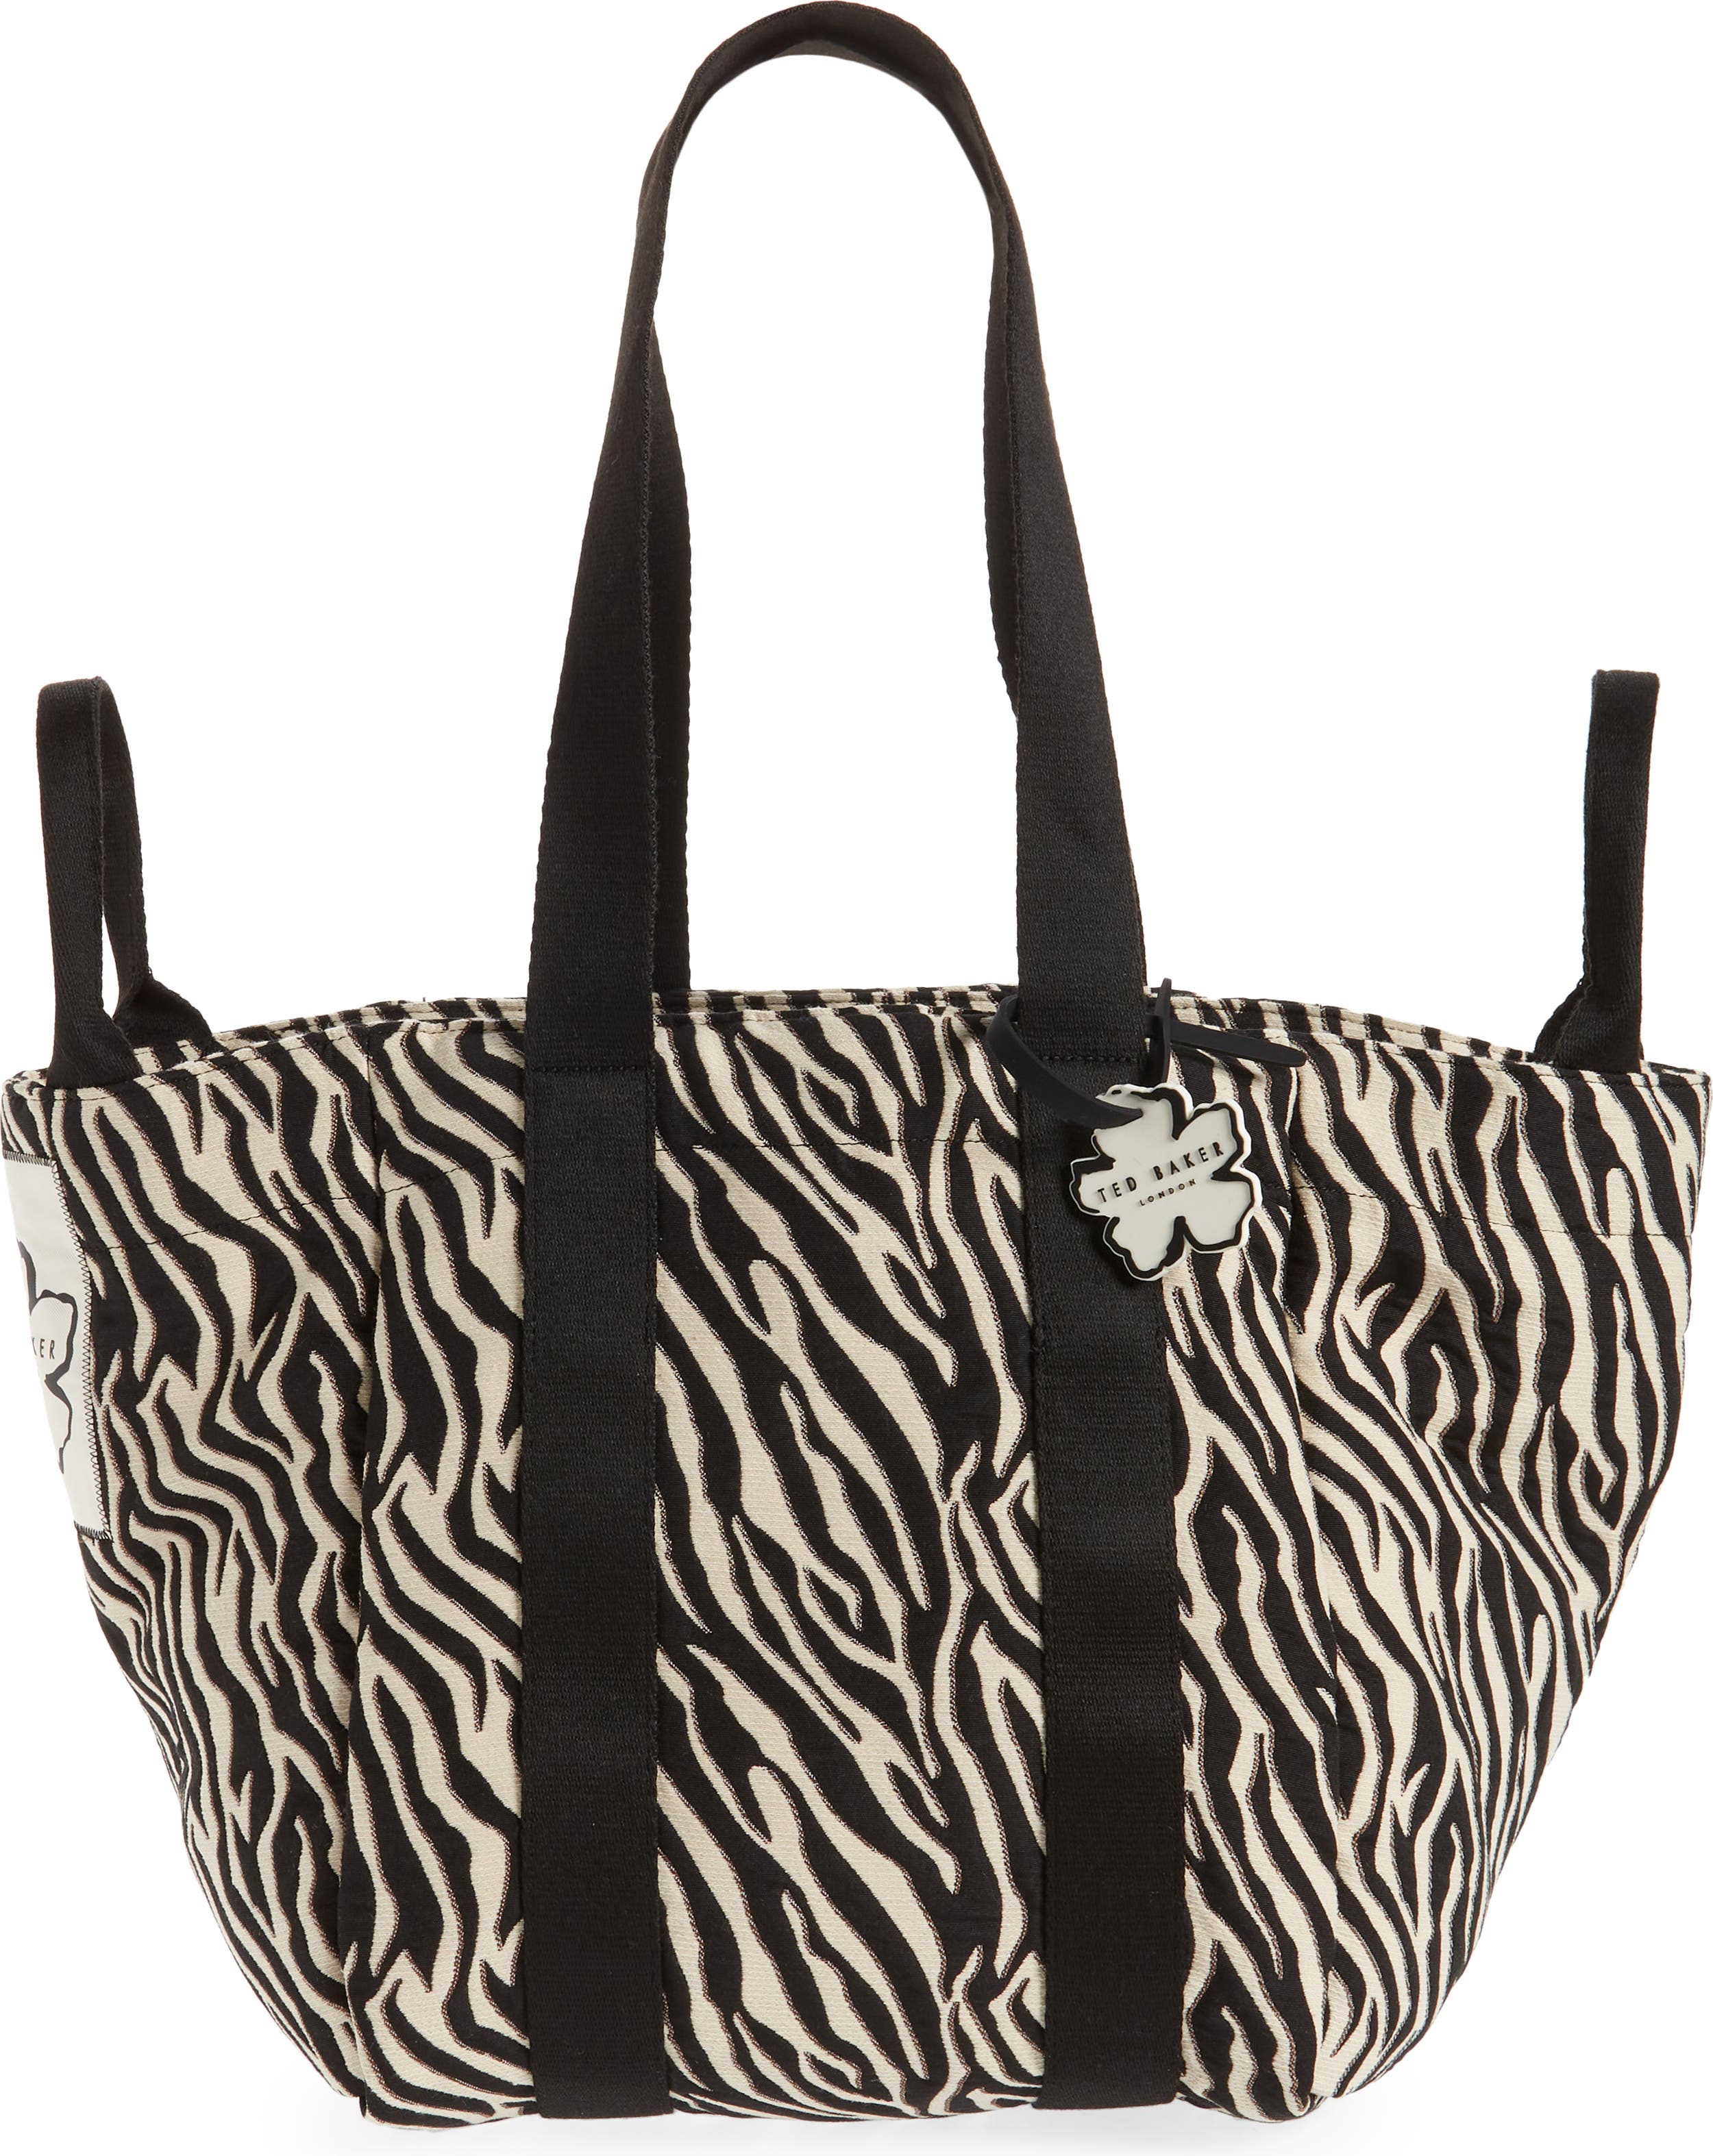 Canvas Shopping Tote Bag Slipper Image Patterns Zebra Slipper Beach Bags for Women Zebra Gifts 